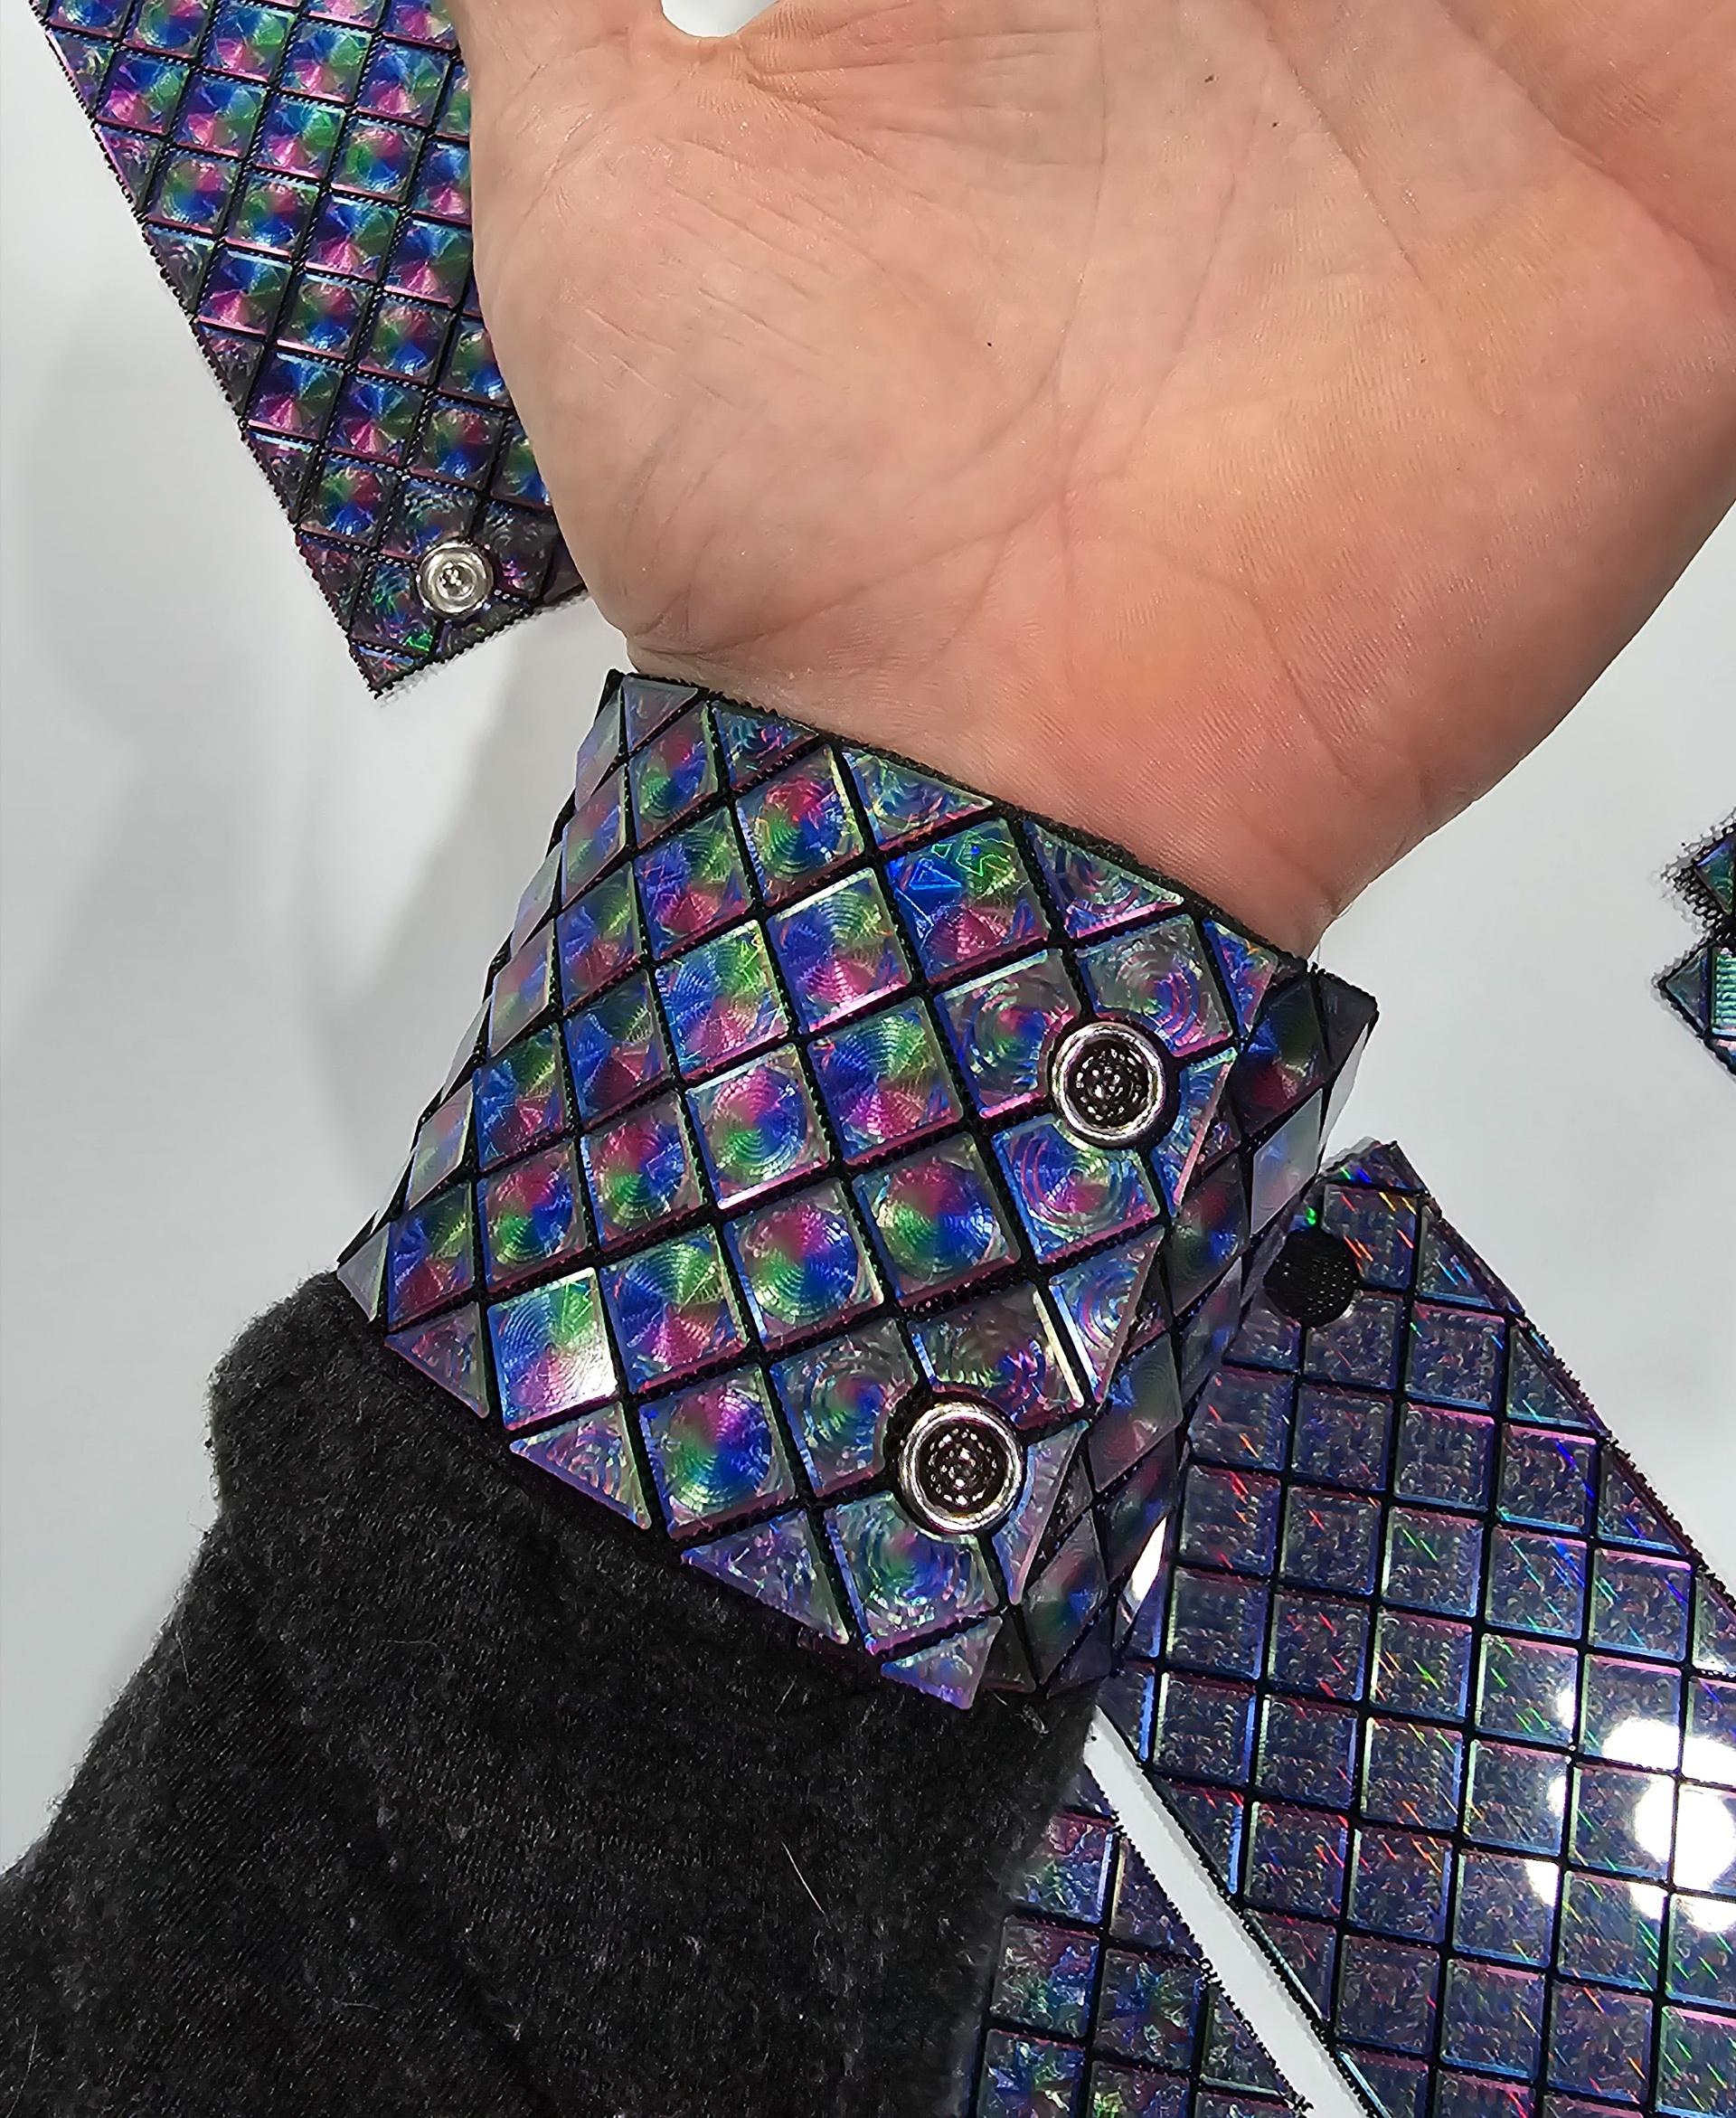 Diamond patterned cuffs - snap fastened - Cuff over a sweatshirt - 3d model